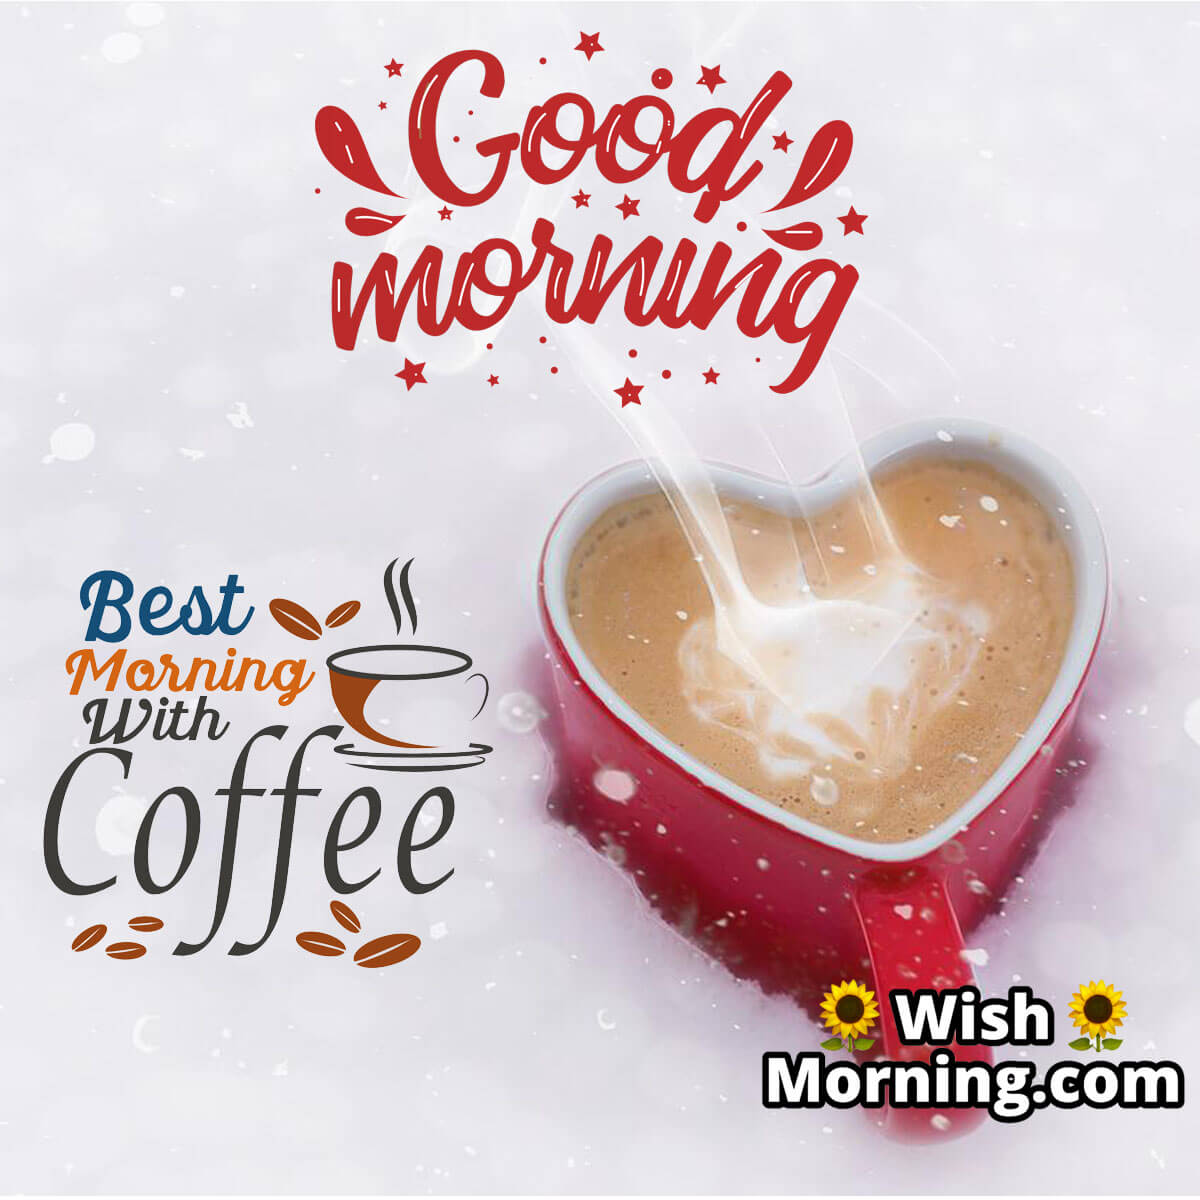 Good Morning Coffee Love